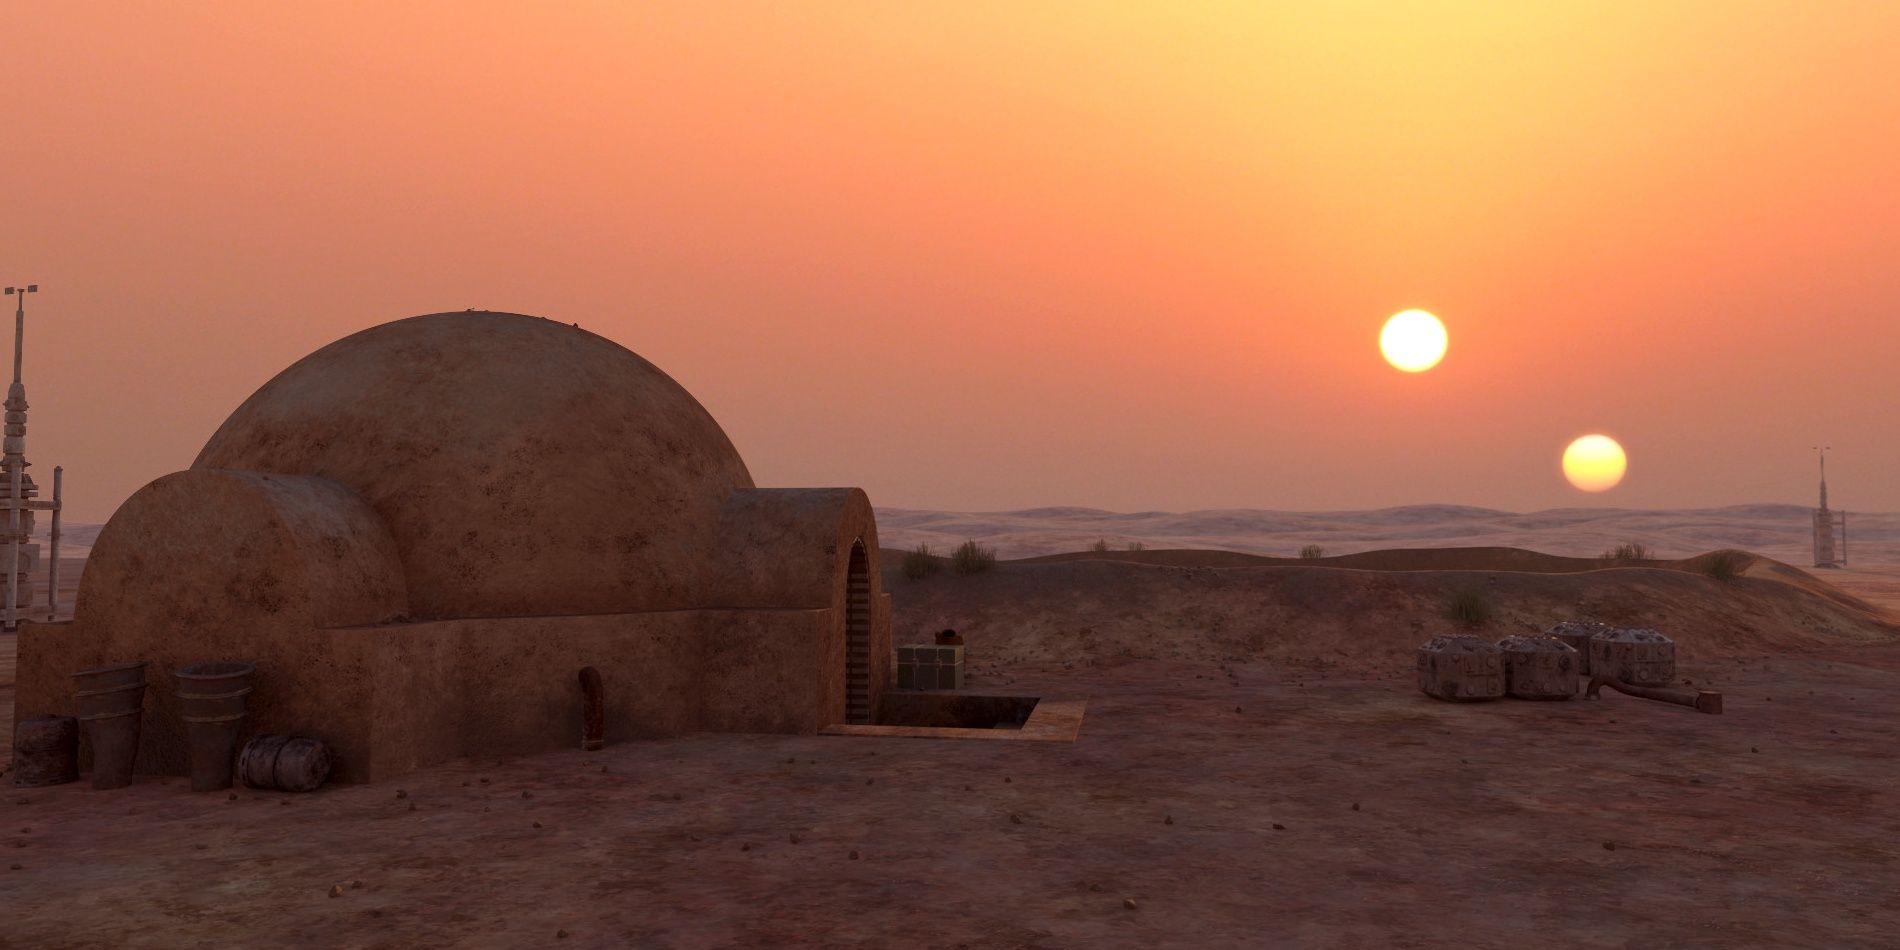 Star Wars Tatooine sunset with the lars homestead